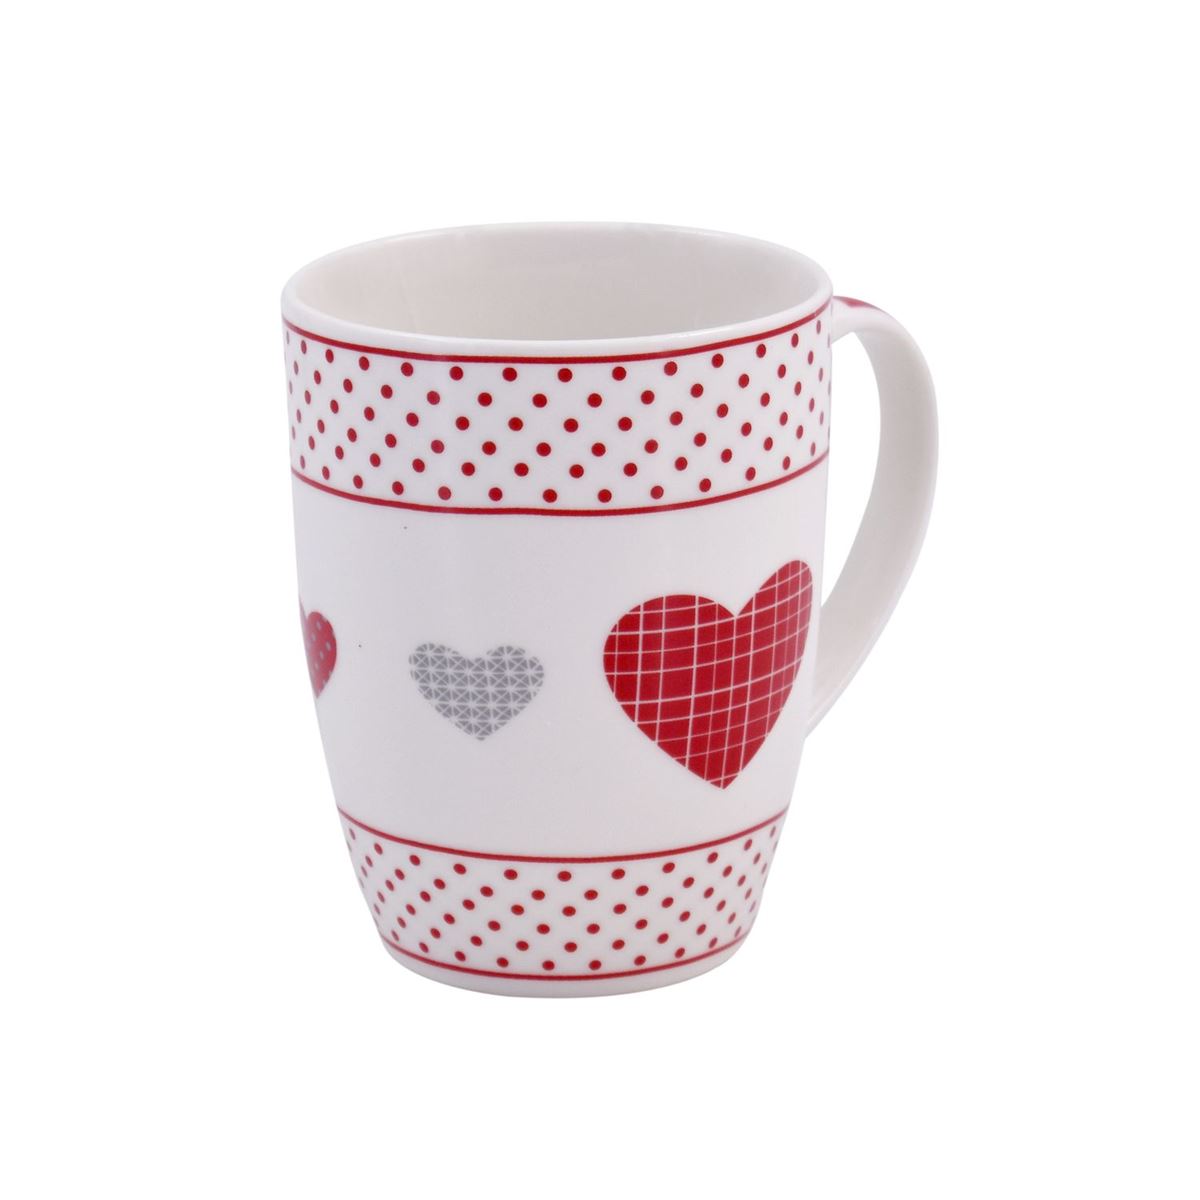 Printed Ceramic Coffee or Tea Mug with handle - 325ml (3788G-D)